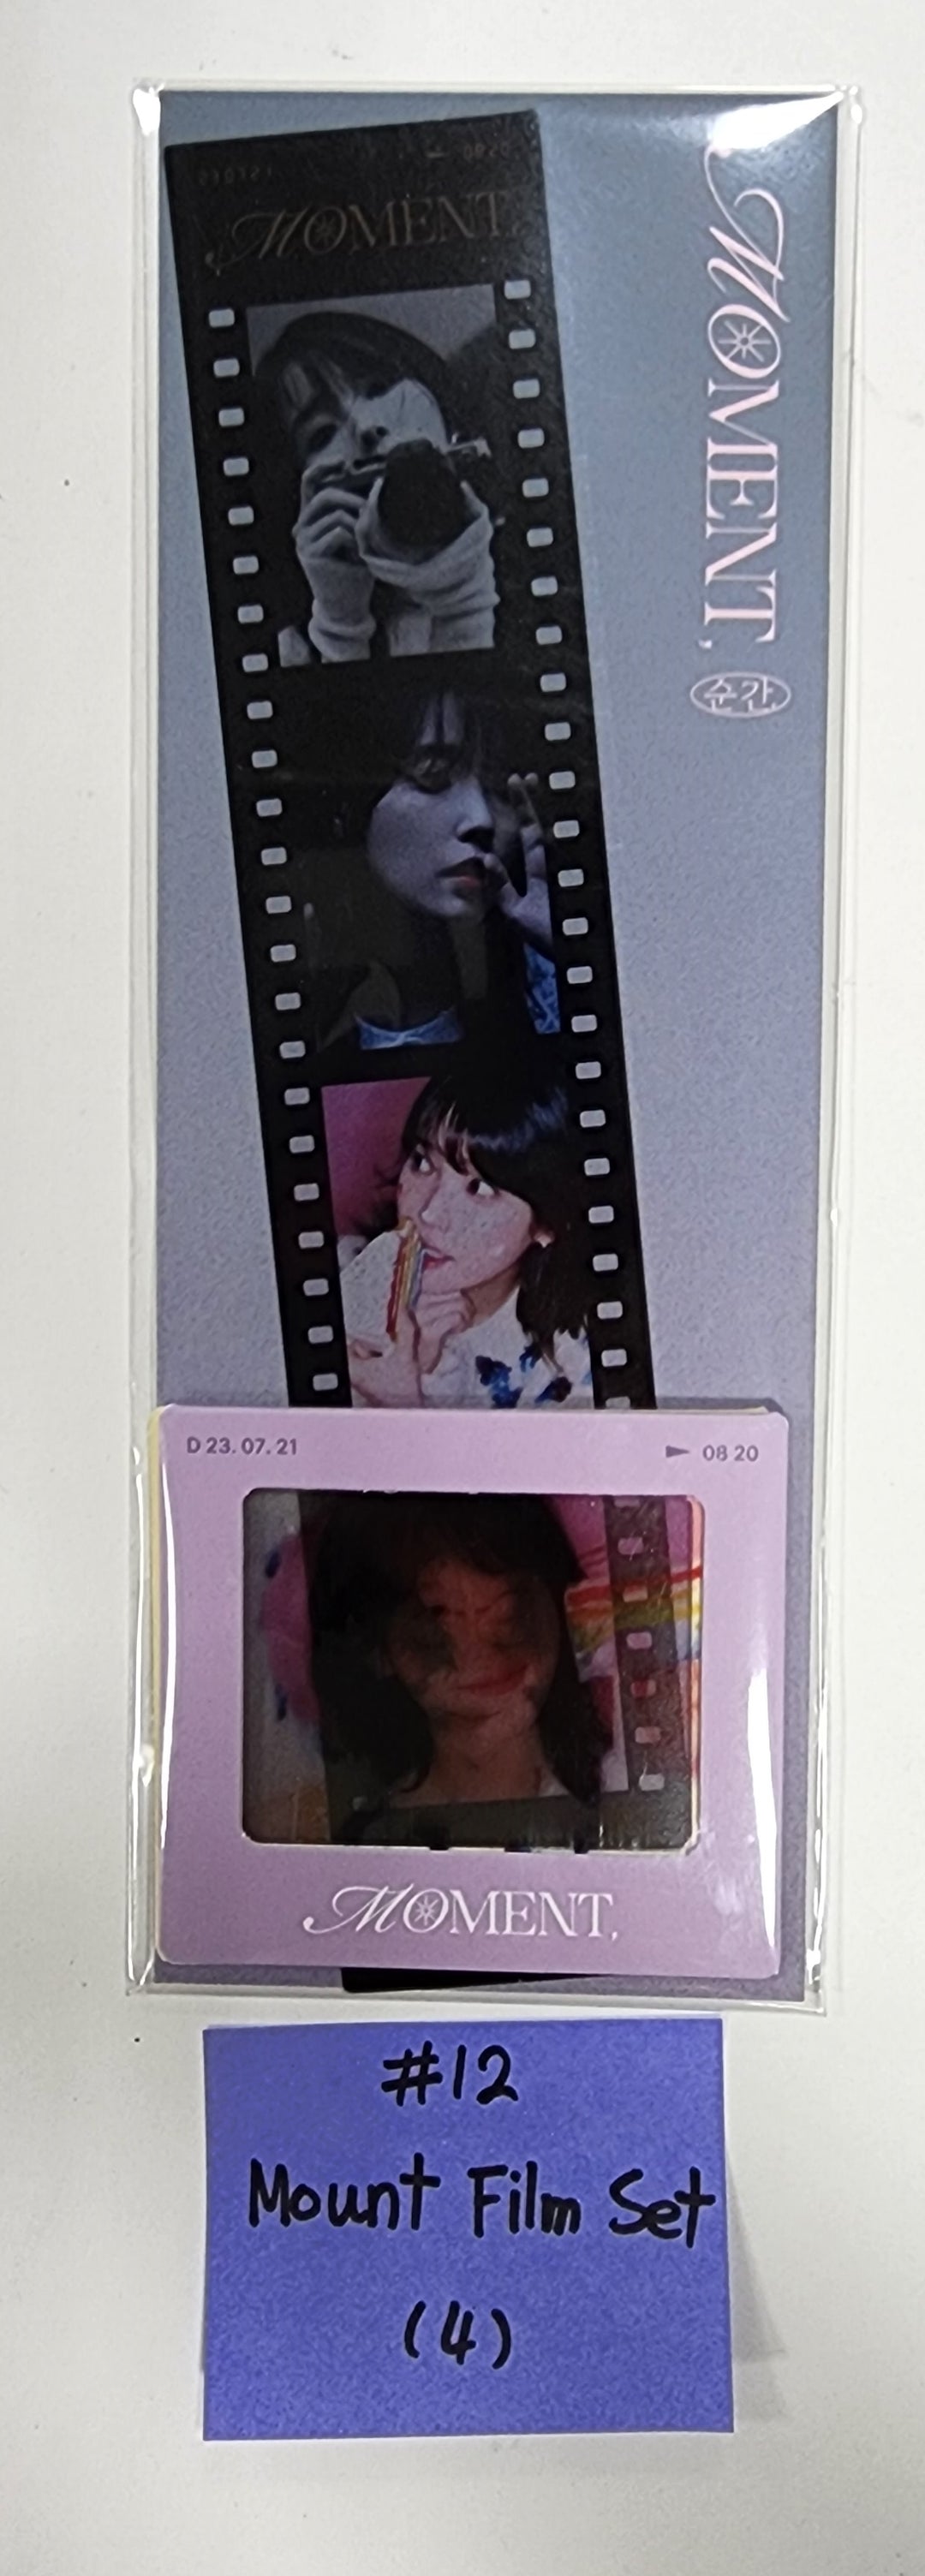 IU "MOMENT" - Official MD [Photo Film Keyring, Lyrics Book, Exhibiton Catalogue, Mount Film set, Postcard, Masking Tape set]